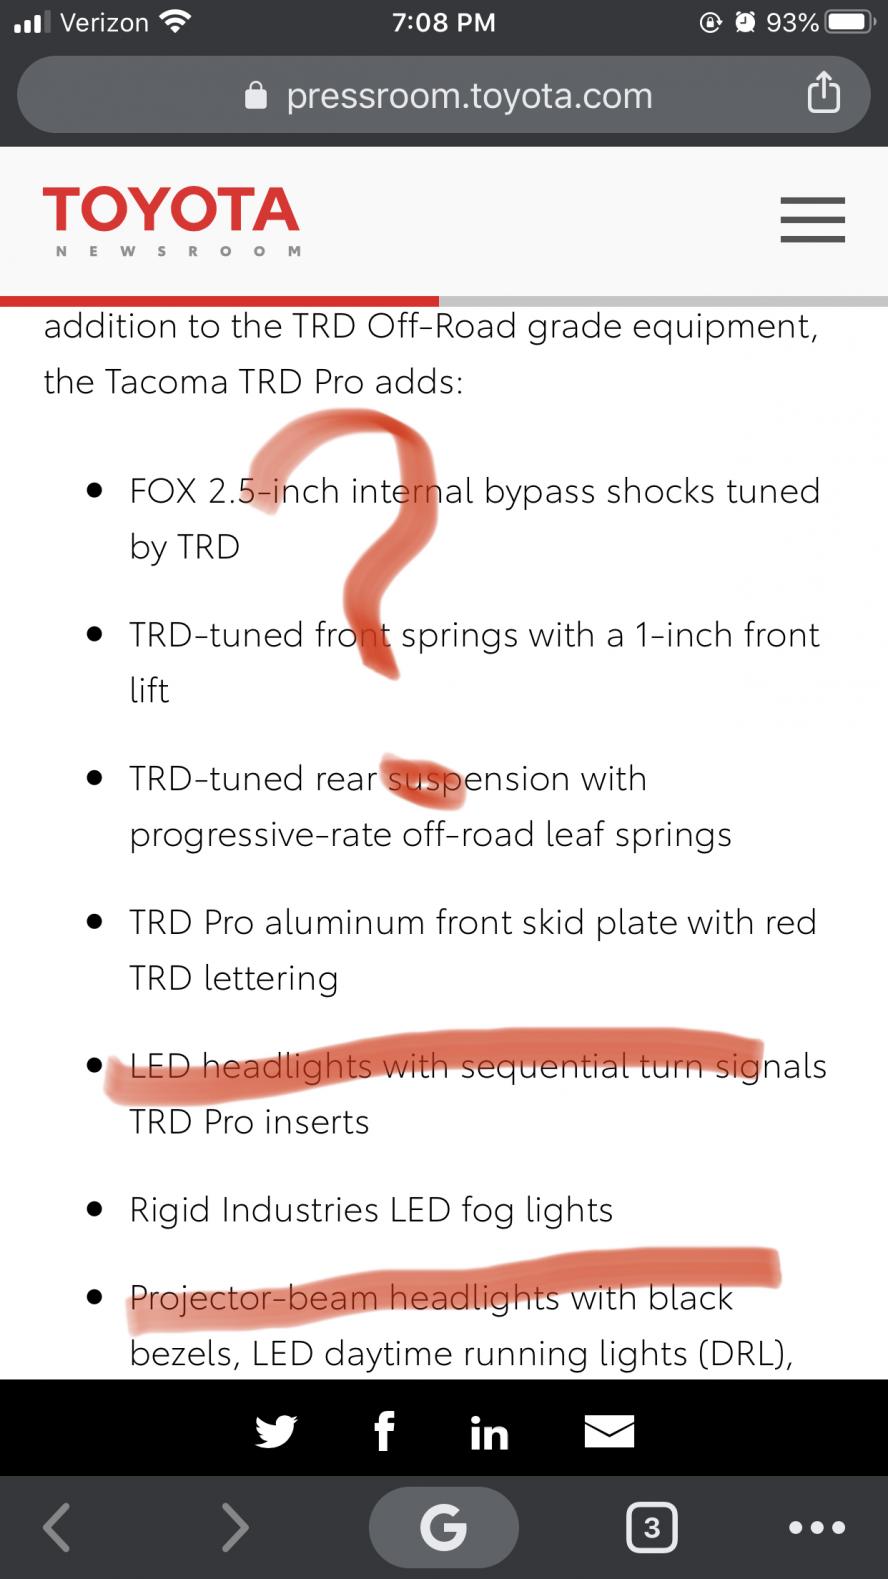 Taco got new LED headlights... so...-b336d34b-4ee7-42ac-8964-1374e62dea7e-jpg